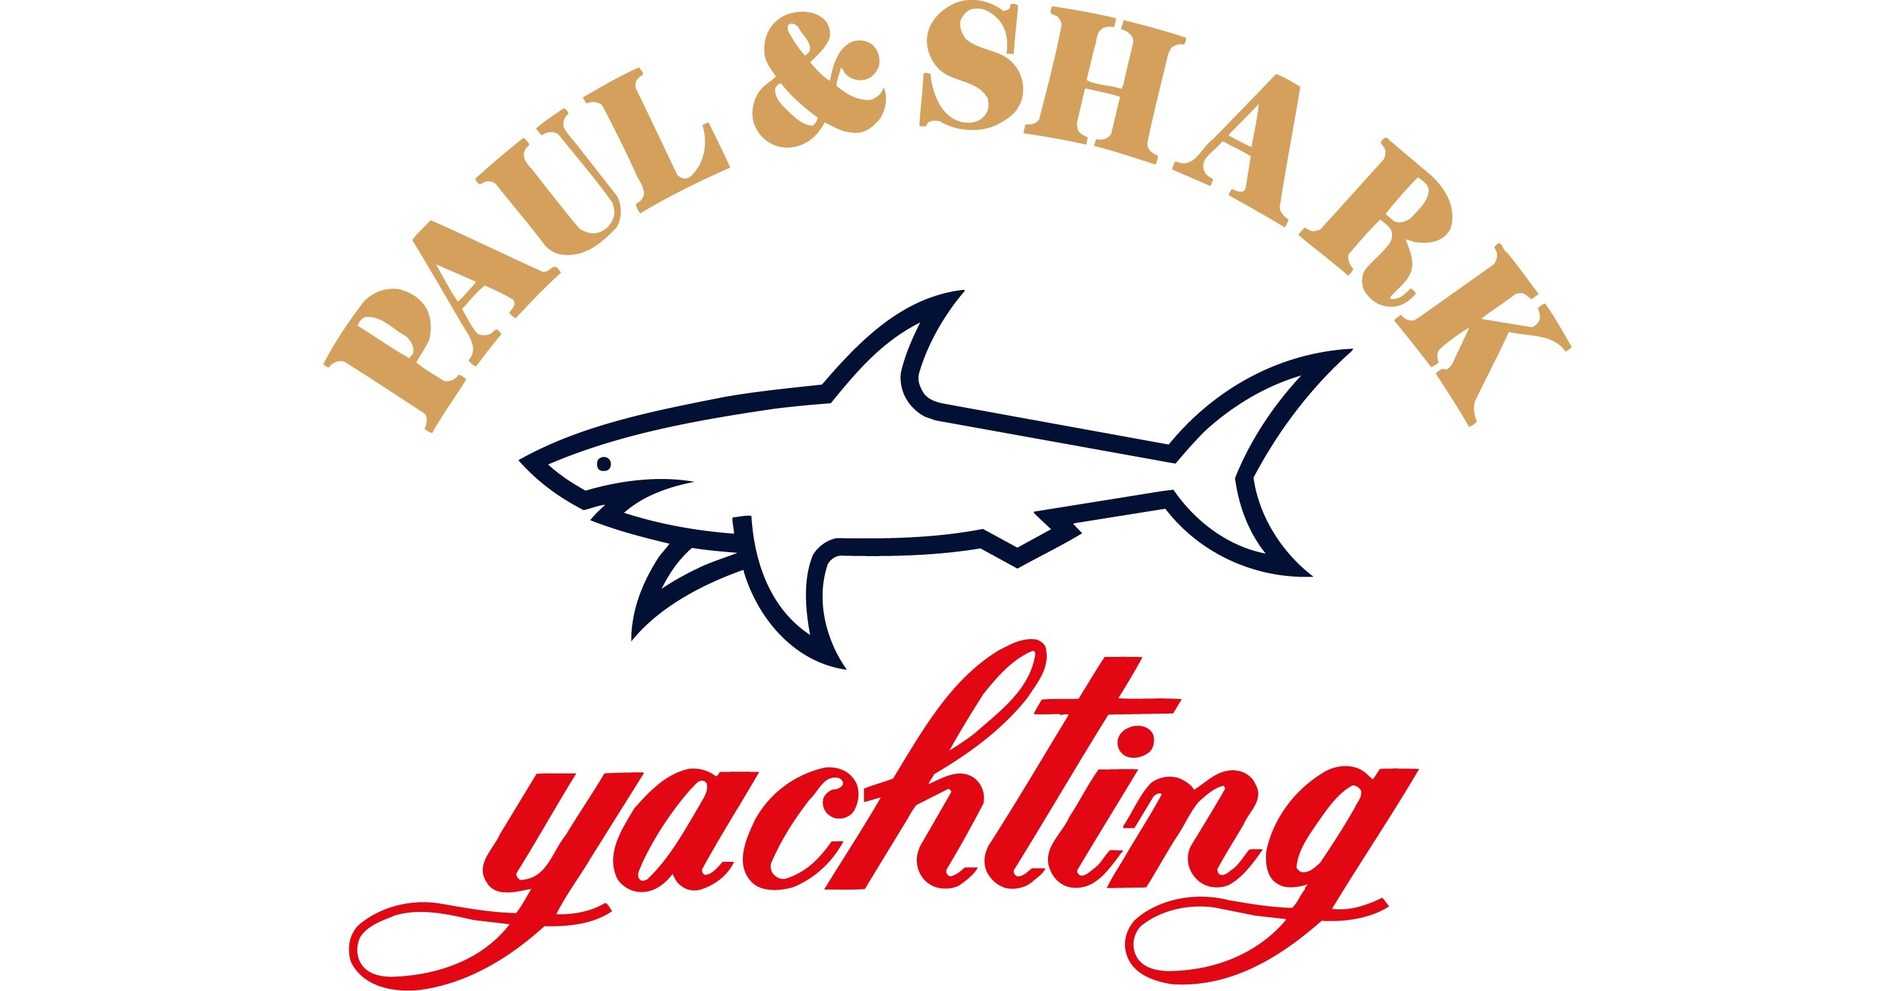 Paul & Shark Announces Partnership With Professional Basketball Gallinari